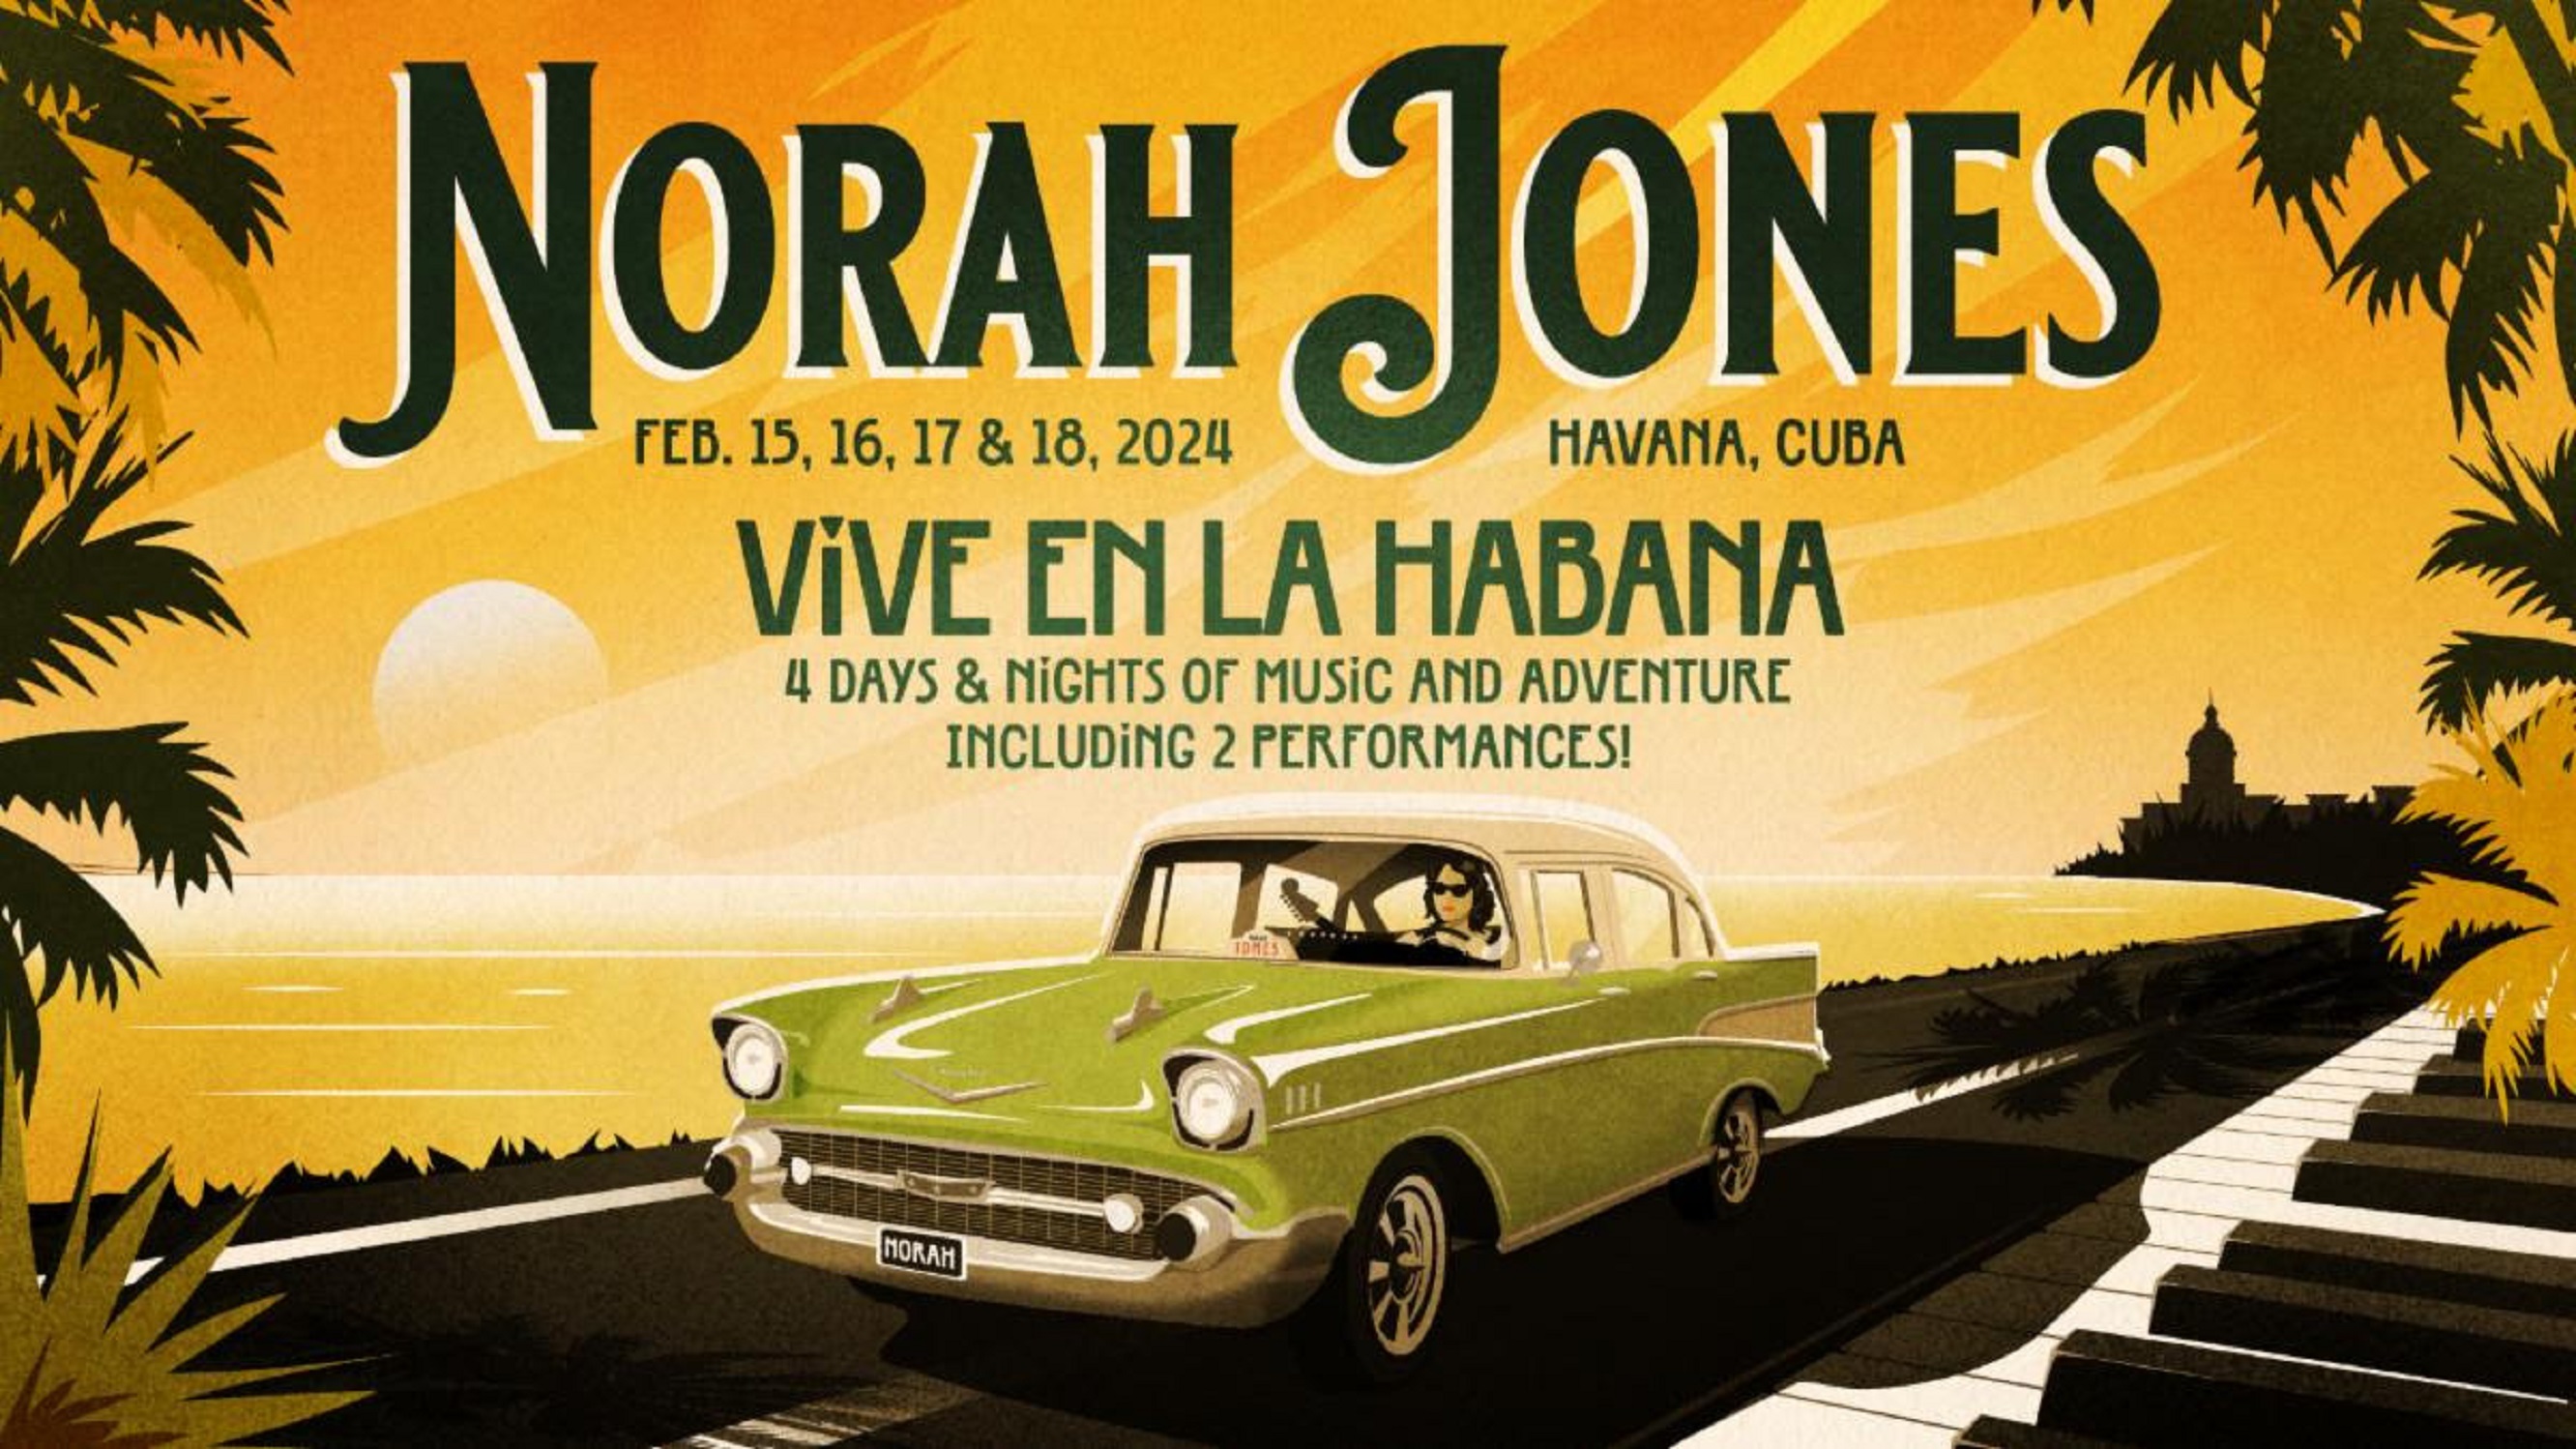 Norah Jones Announces Educational Visit and Concerts In Cuba